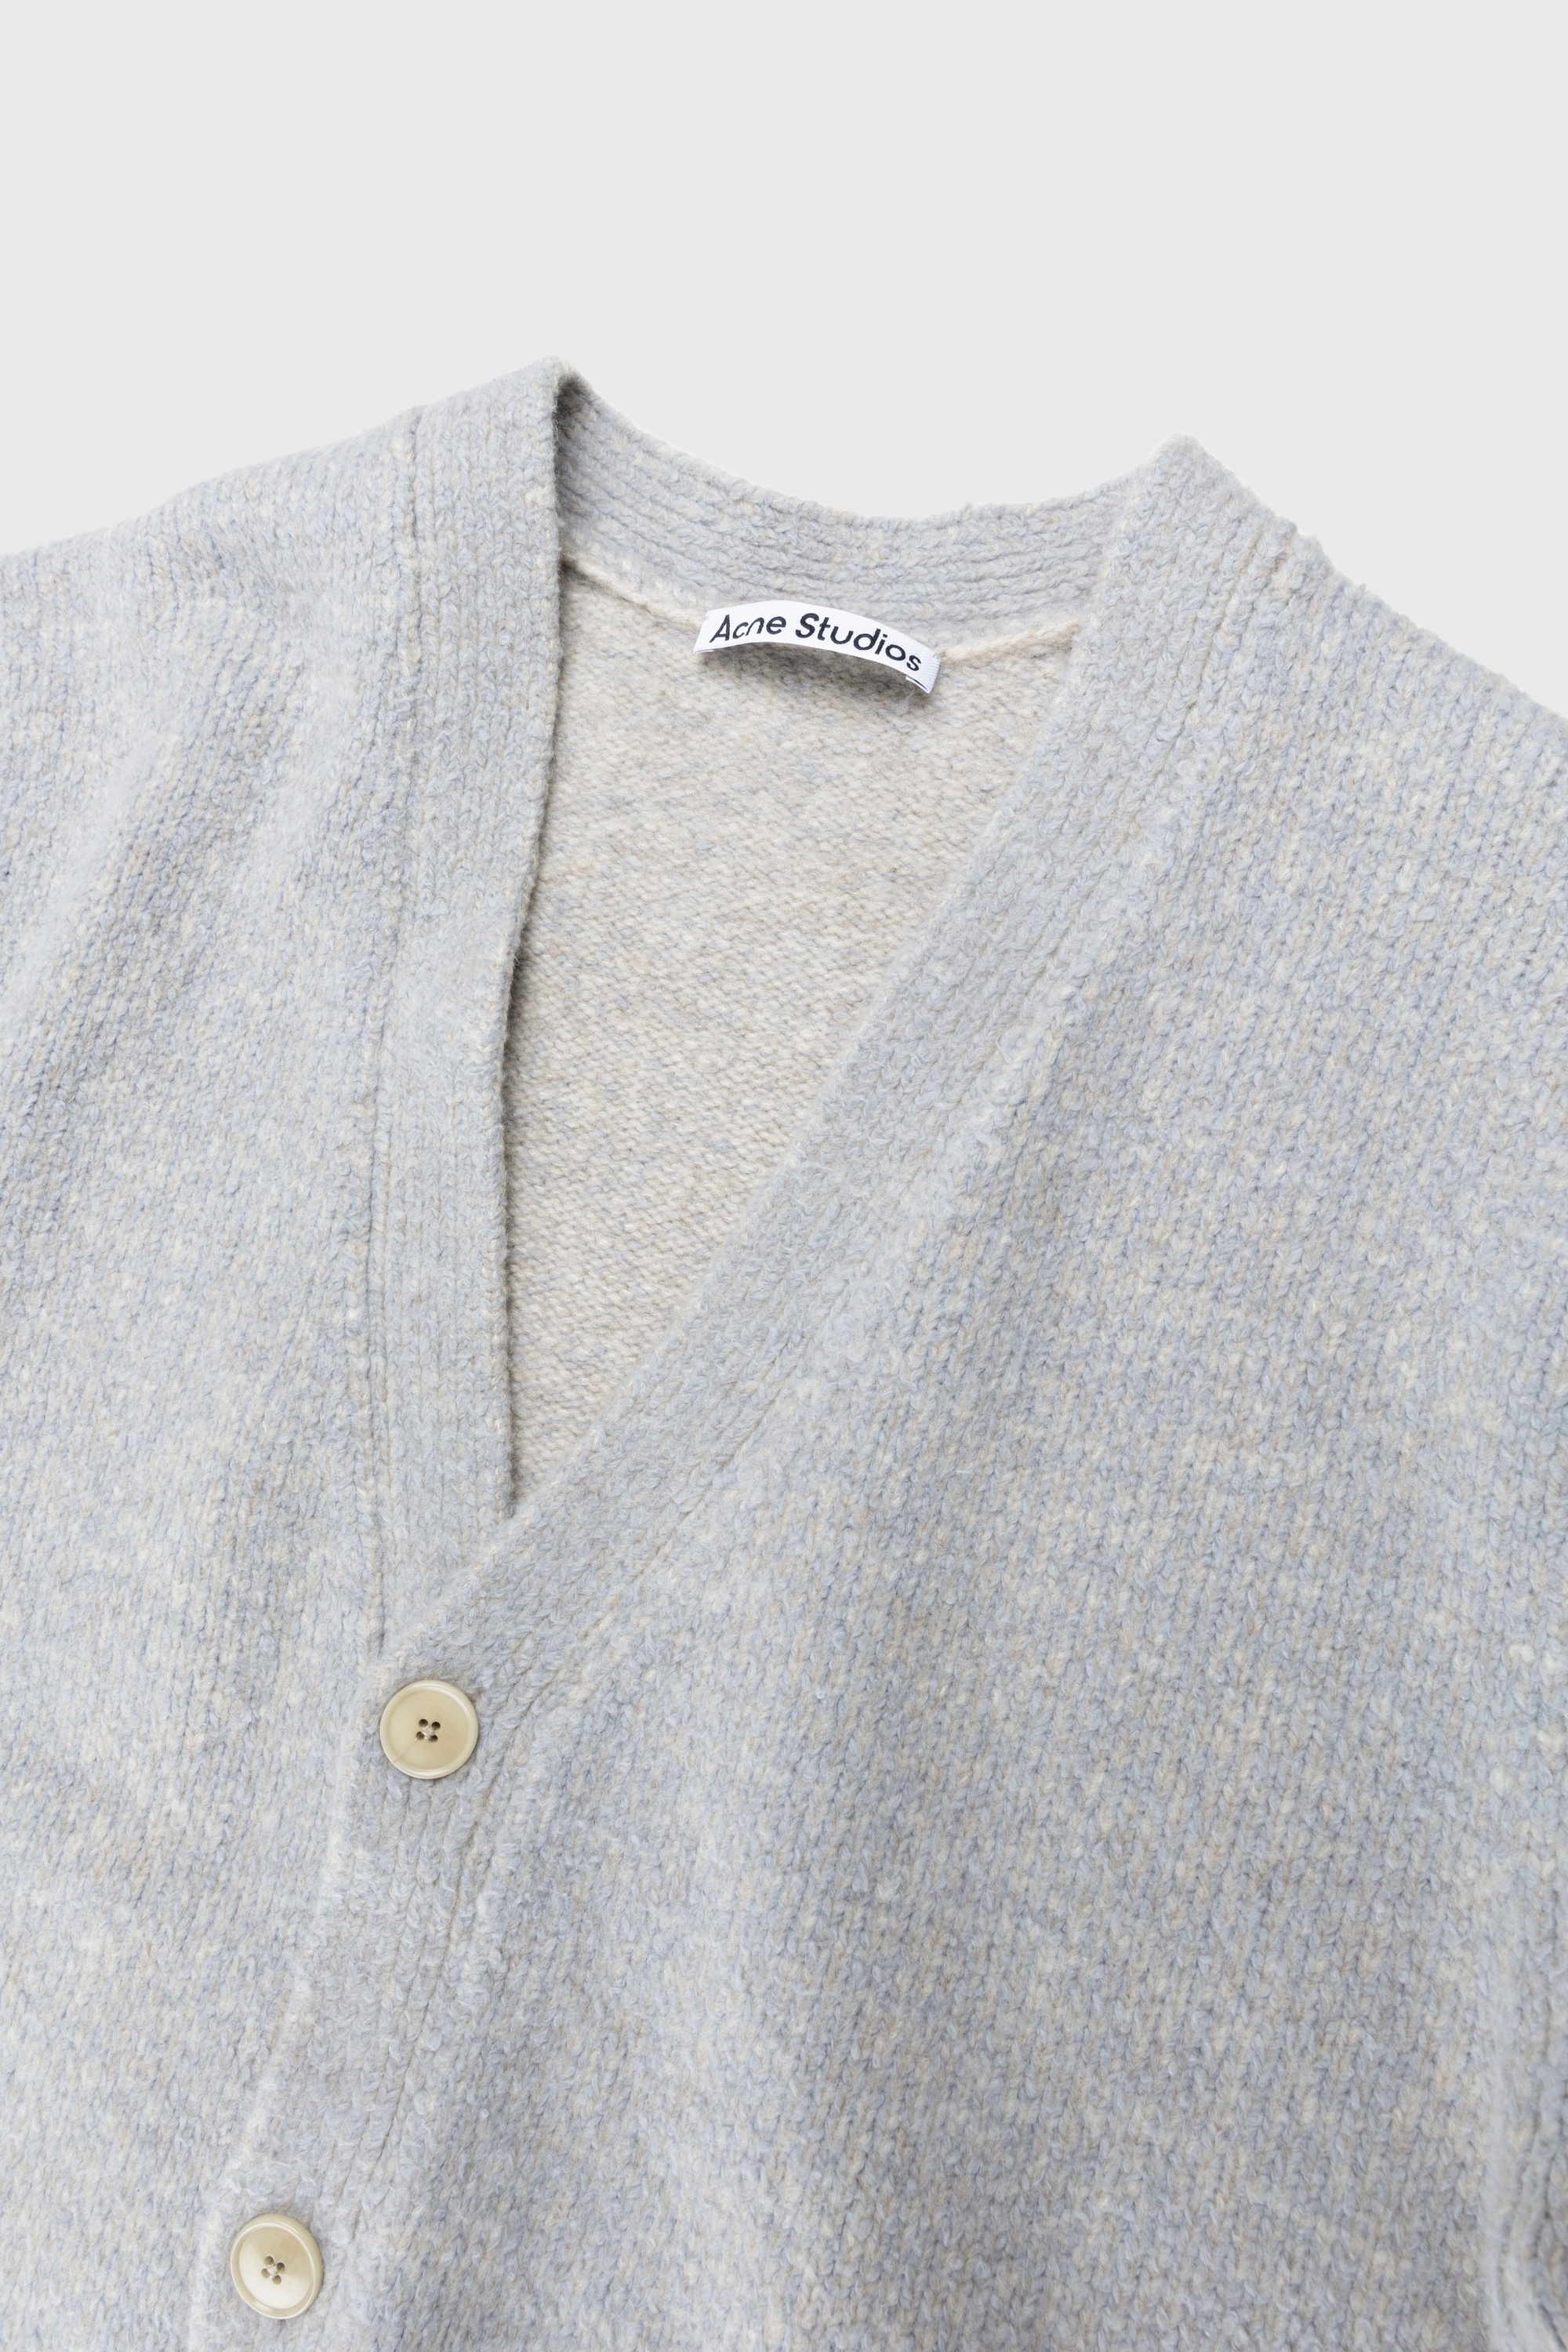 Acne Studios – V-Neck Cardigan Sweater Steel Blue - Knitwear - Blue - Image 4